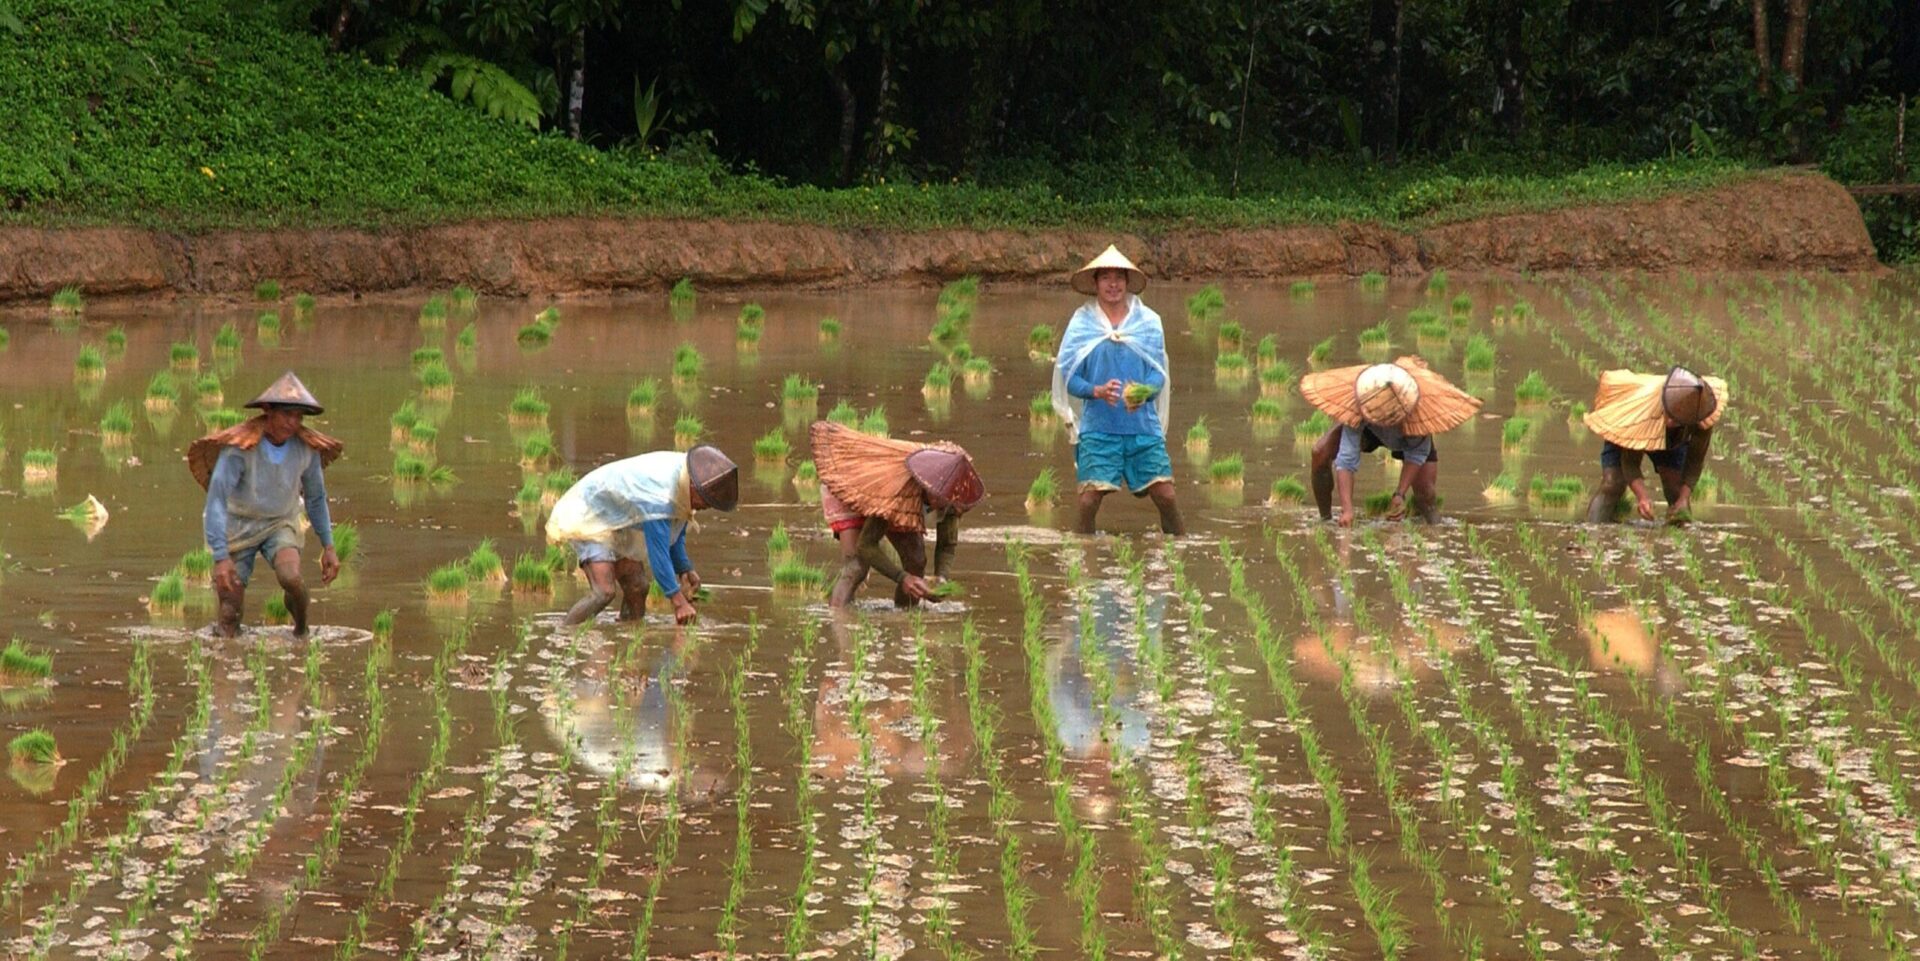 Six people harvesting rice, standing in knee high water